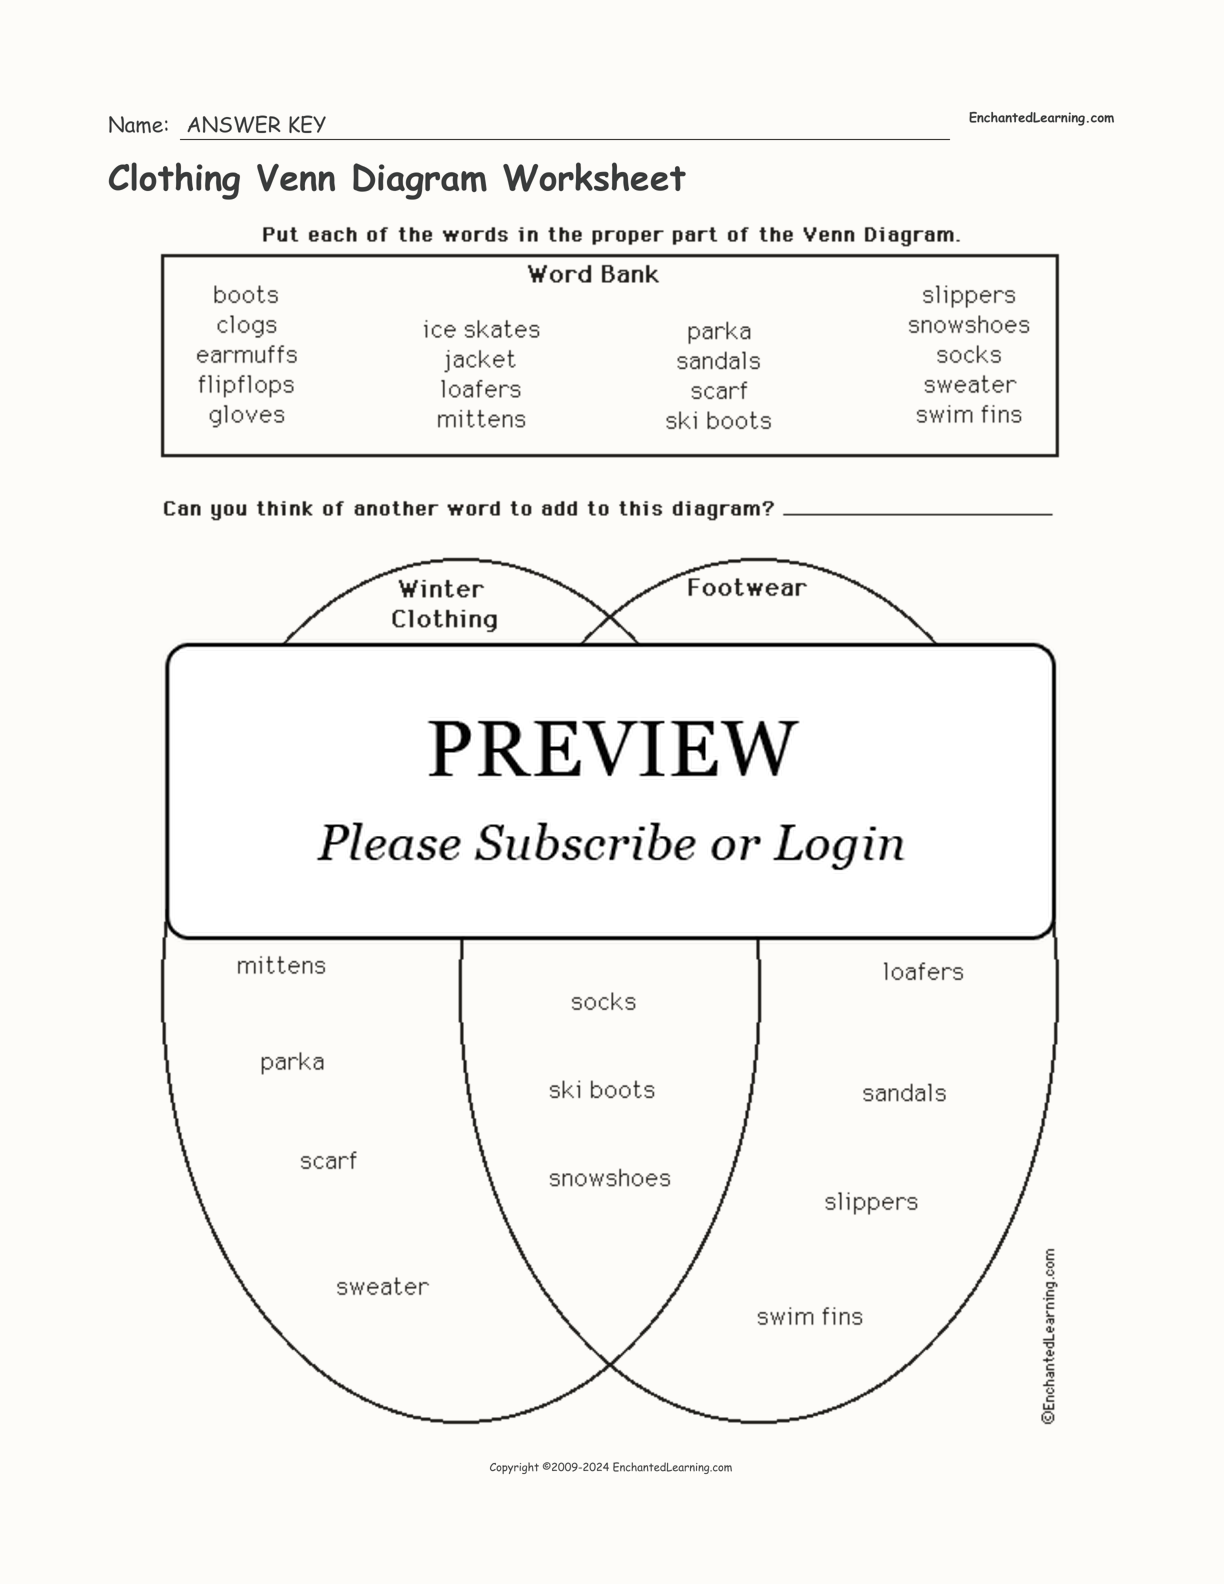 Clothing Venn Diagram Worksheet interactive worksheet page 2